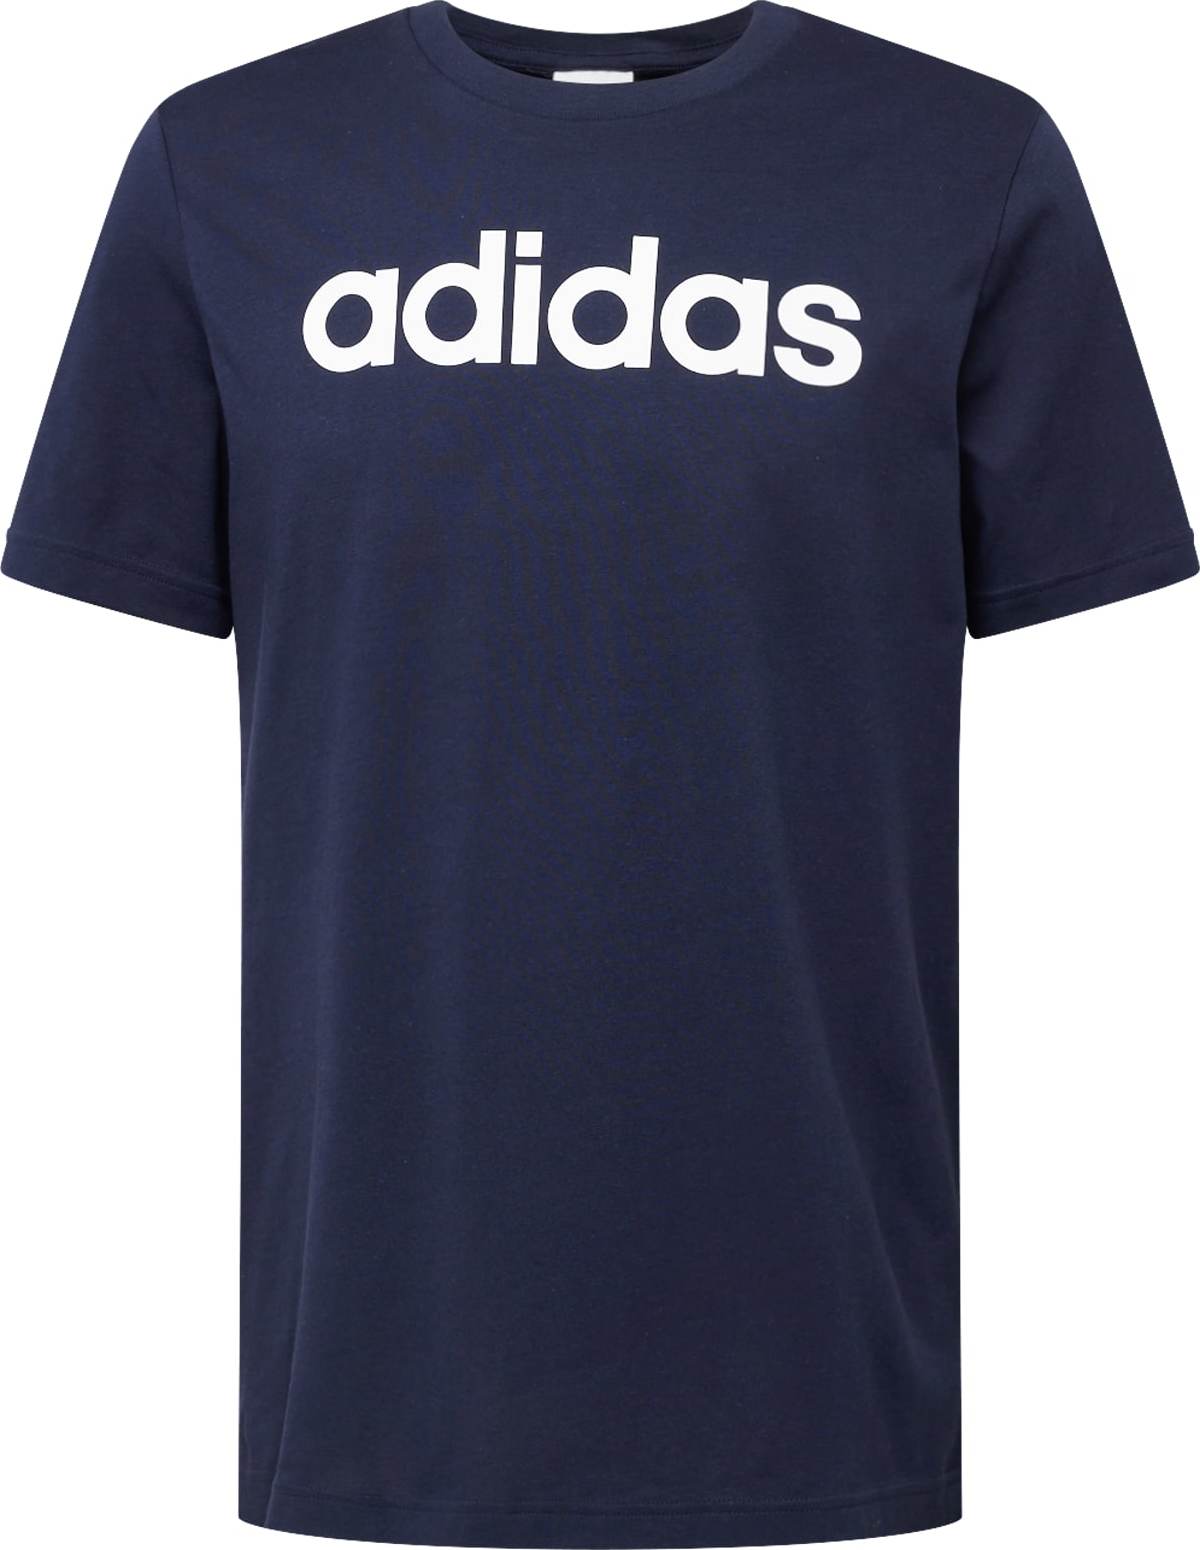 Funkční tričko ADIDAS SPORTSWEAR tmavě modrá / bílá